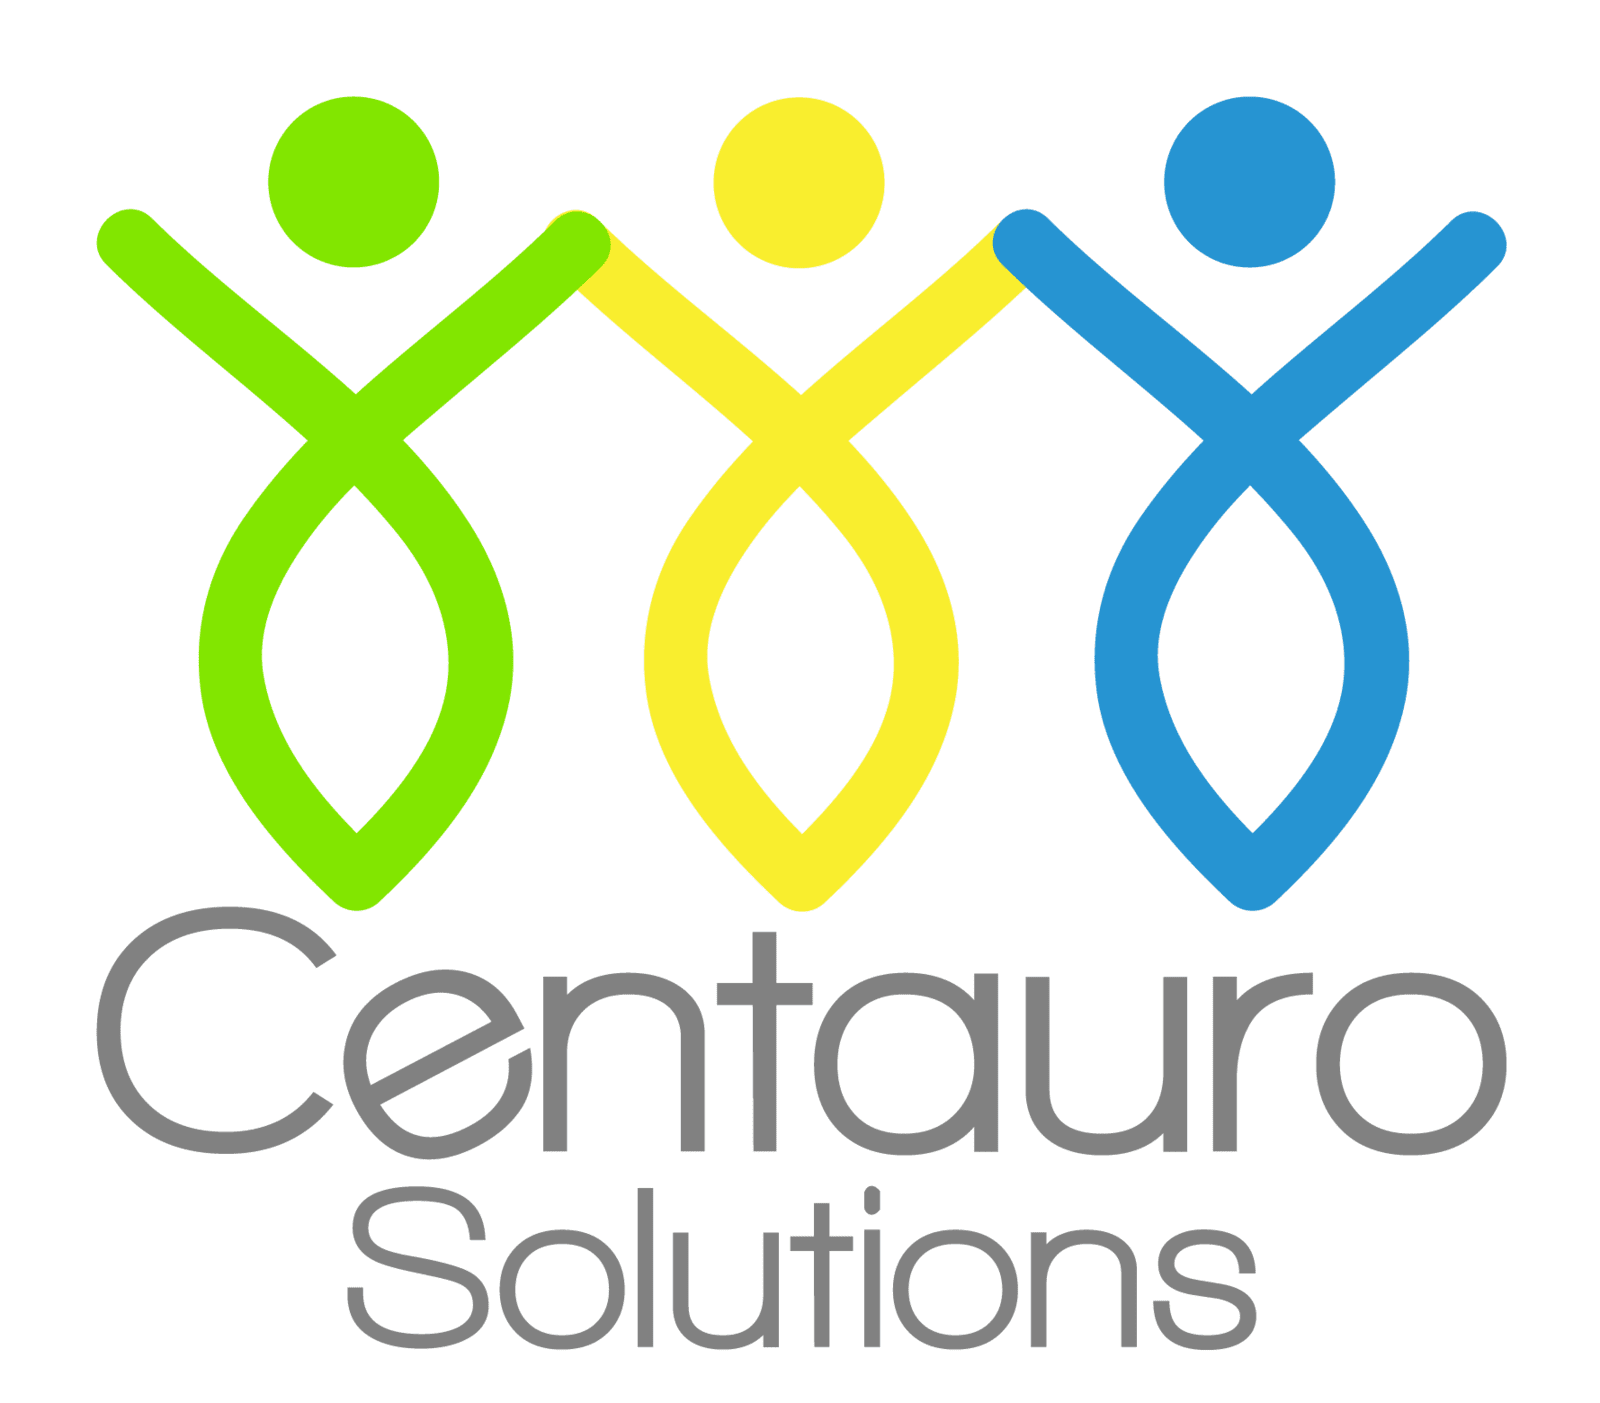 Centauro Solutions Logo